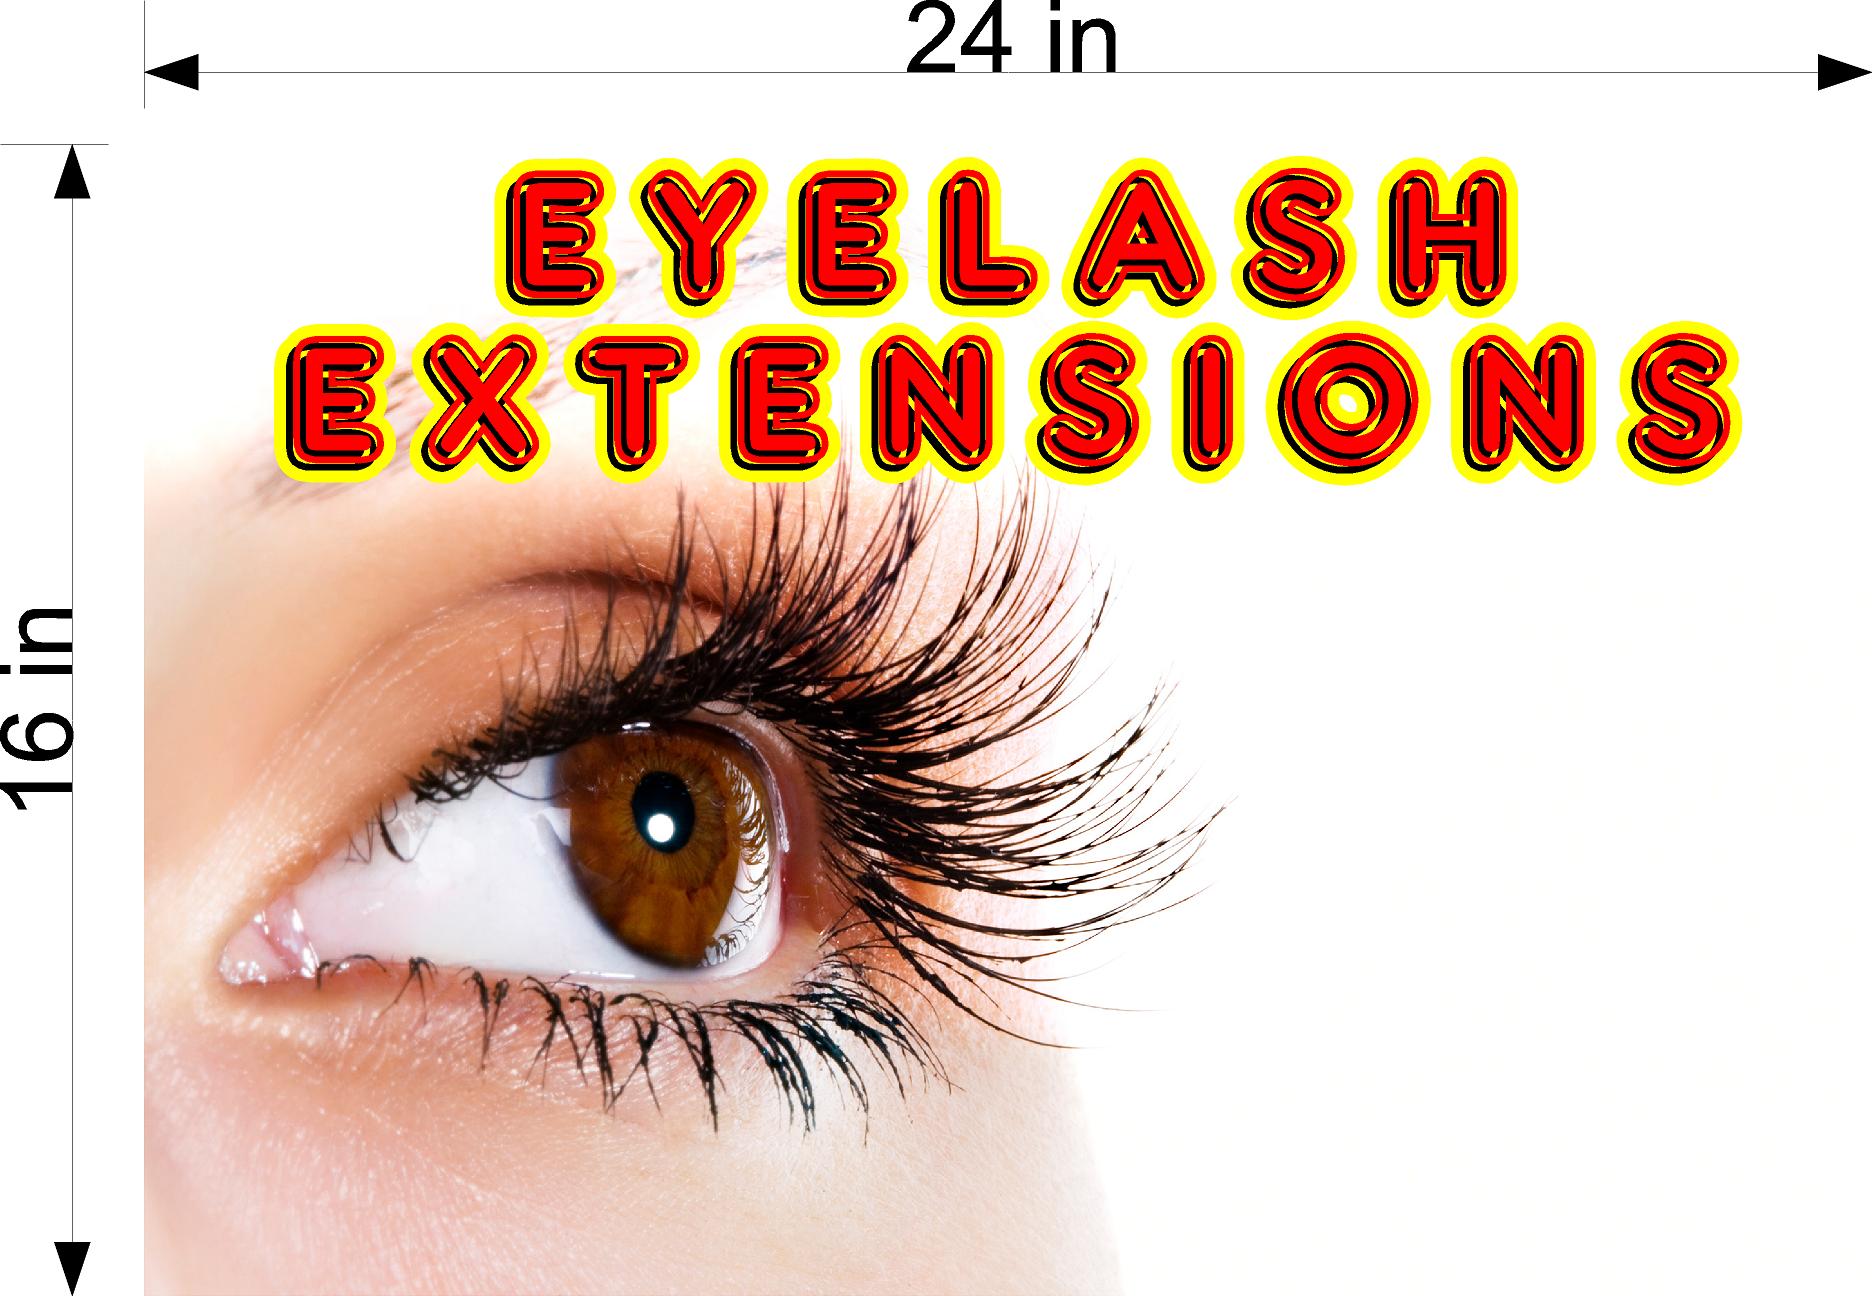 Eyelash 07 Wallpaper Poster Decal with Adhesive Backing Wall Sticker Decor Indoors Interior Sign Horizontal